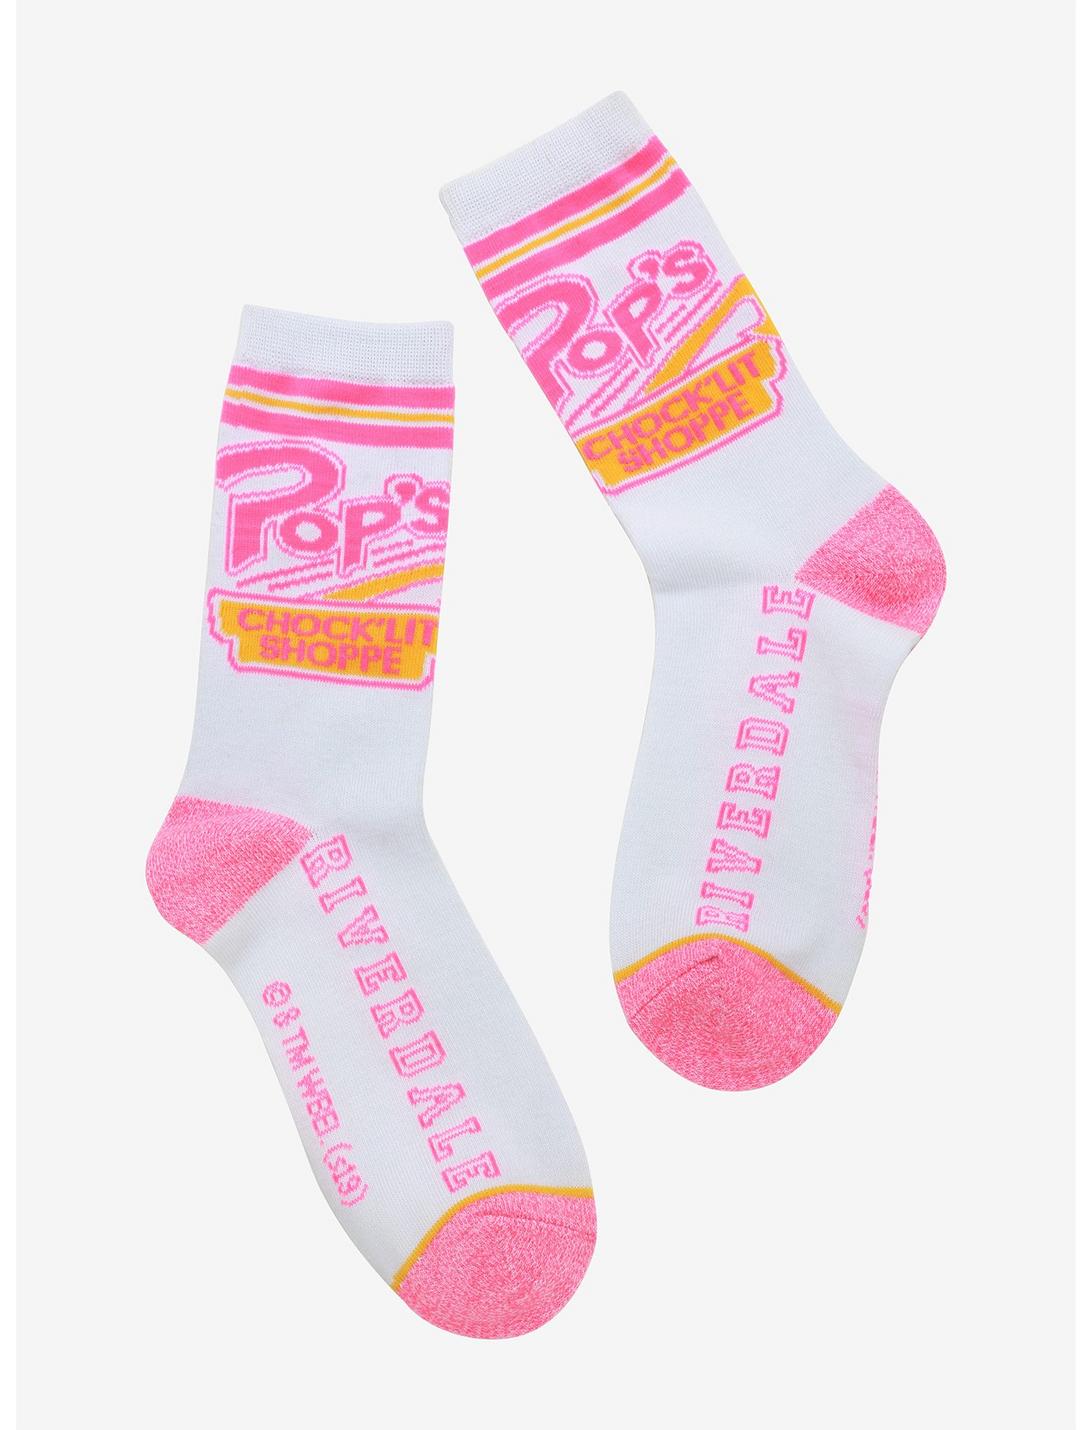 Riverdale Pop's Chock'lit Shoppe Neon Crew Socks, , hi-res